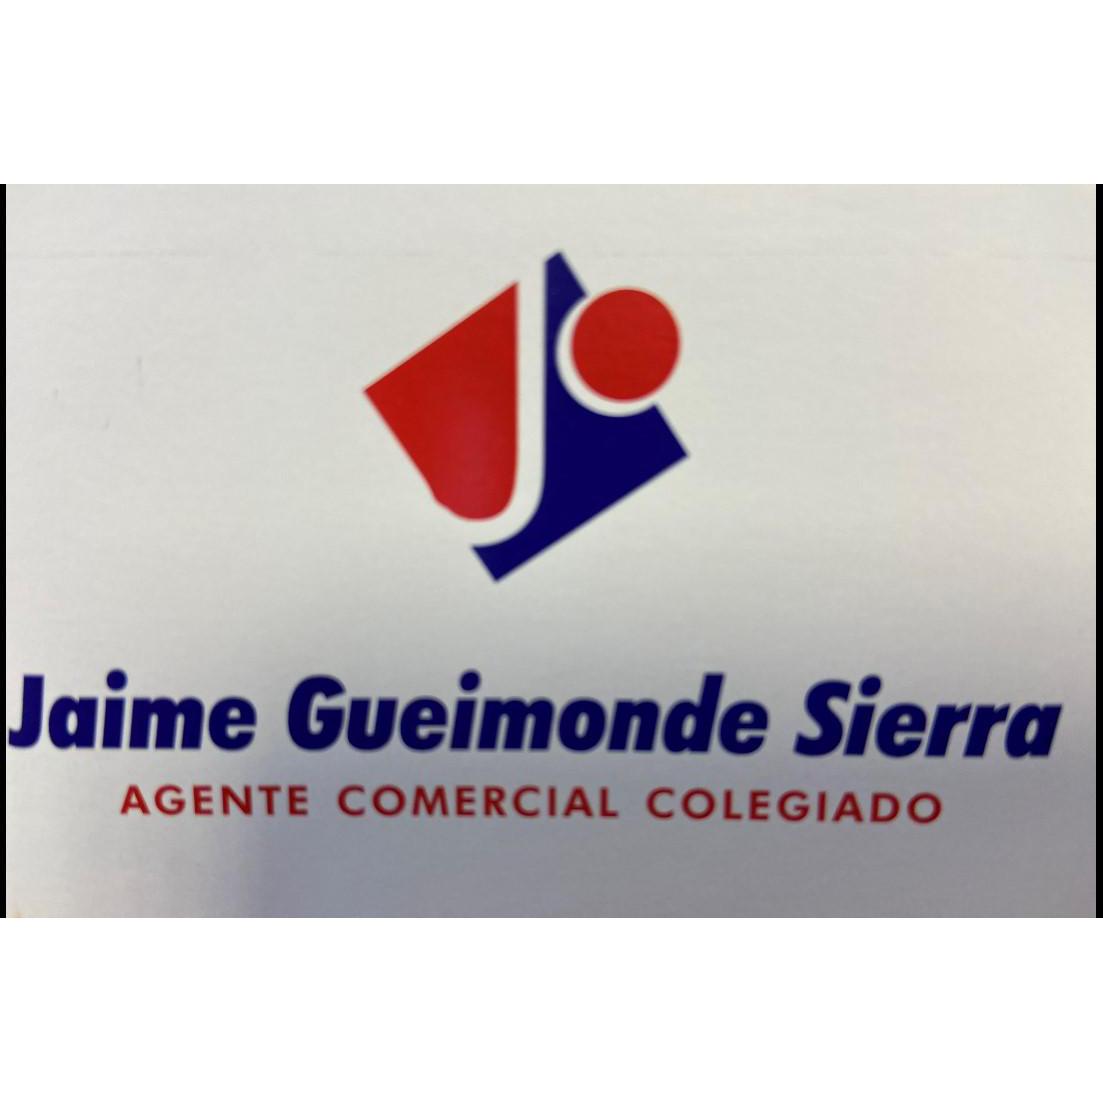 Jaime Gueimonde Sierra Logo